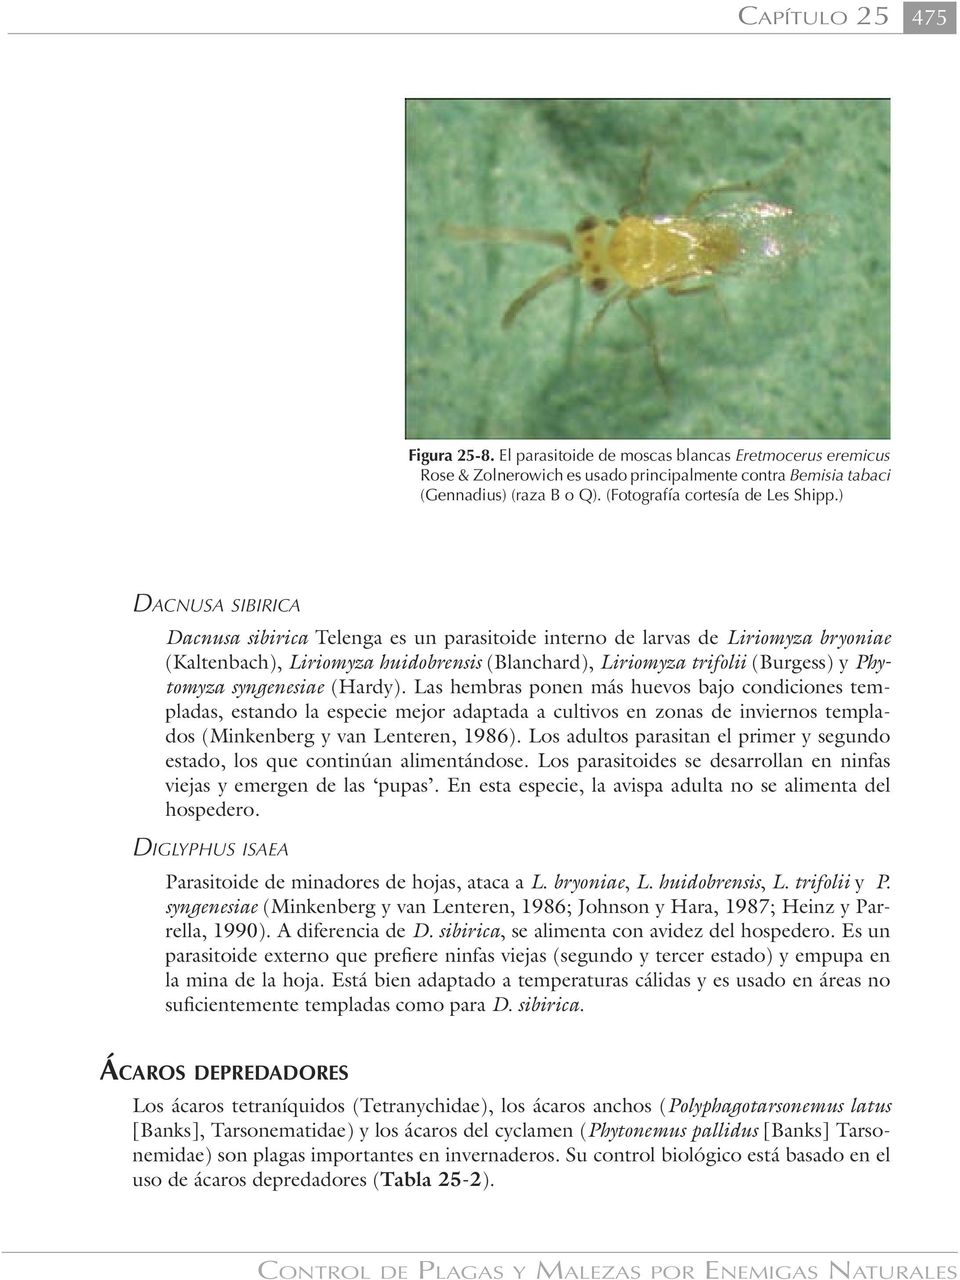 ) DACNUSA SIBIRICA Dacnusa sibirica Telenga es un parasitoide interno de larvas de Liriomyza bryoniae (Kaltenbach), Liriomyza huidobrensis (Blanchard), Liriomyza trifolii (Burgess) y Phytomyza